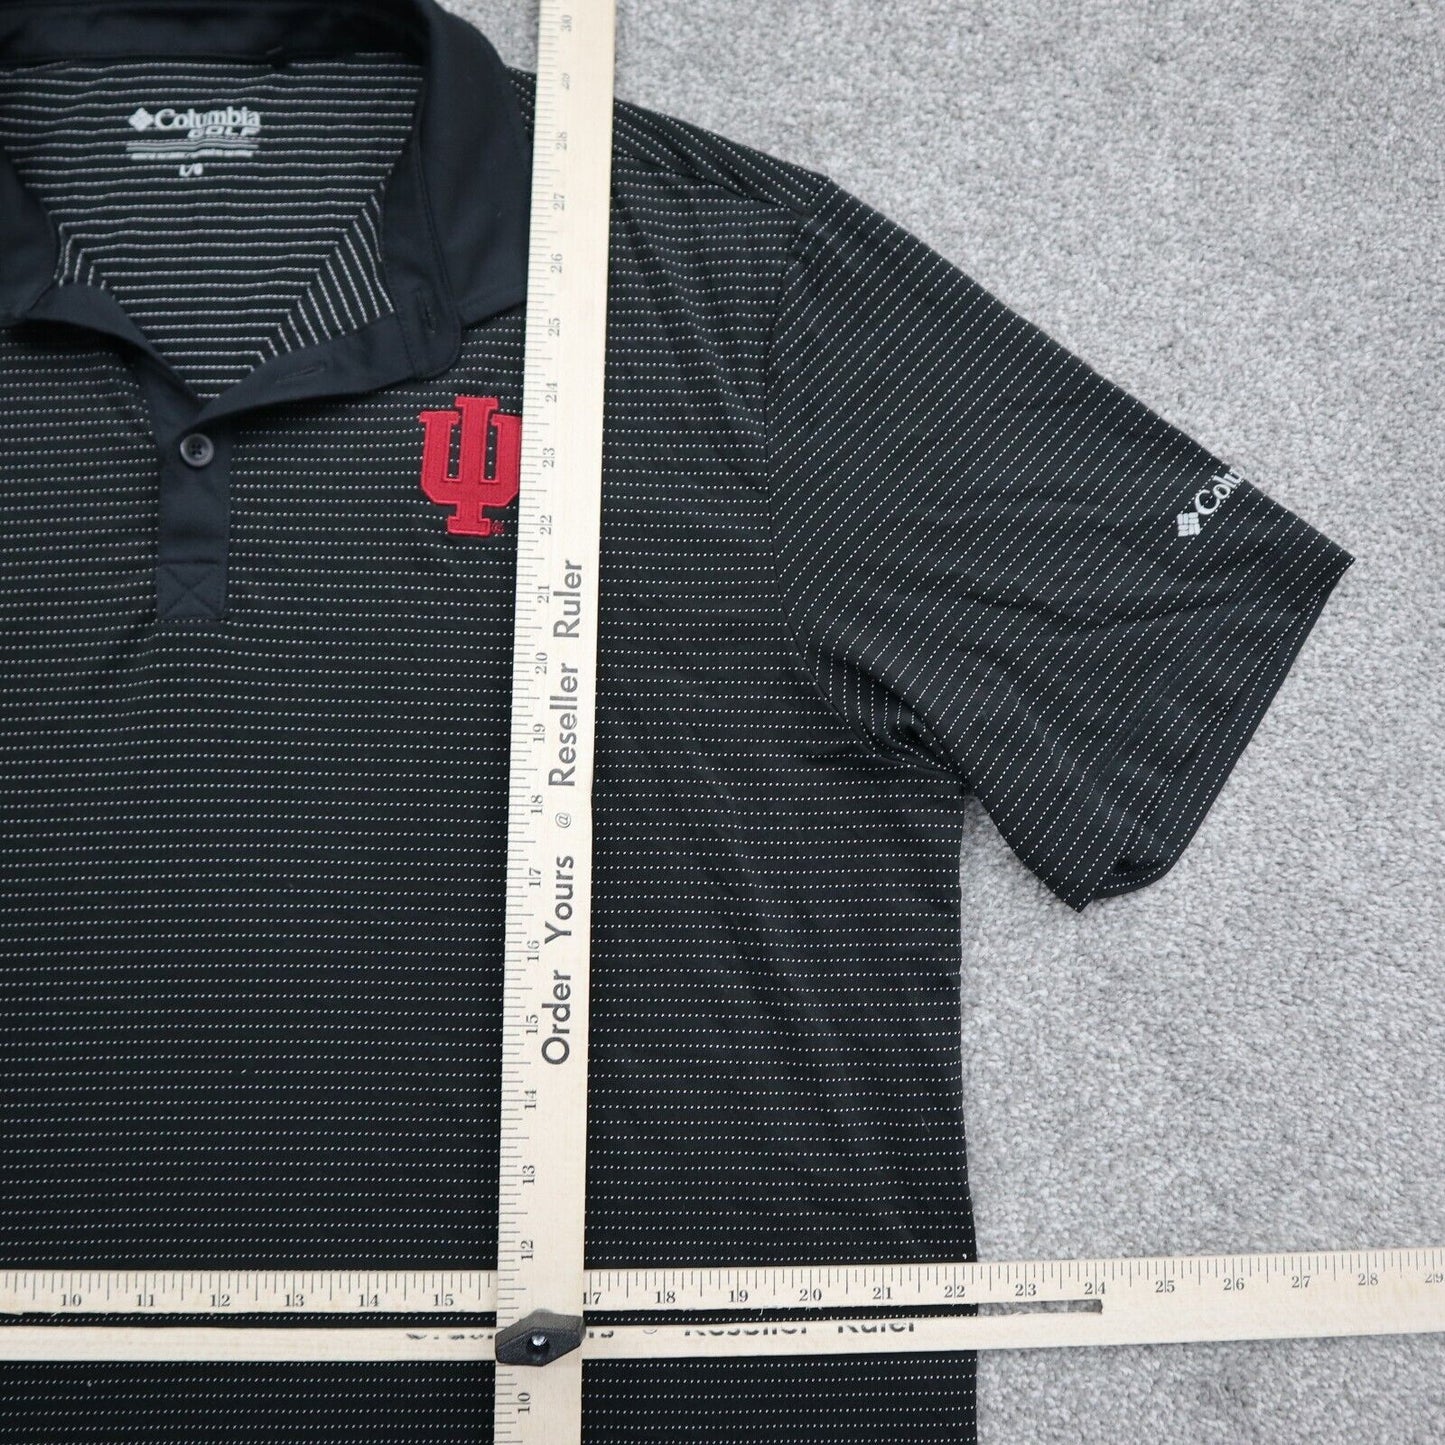 Columbia Mens Golf Polo T-Shirt Short Sleeve Collared Neck Logo Black Size Large